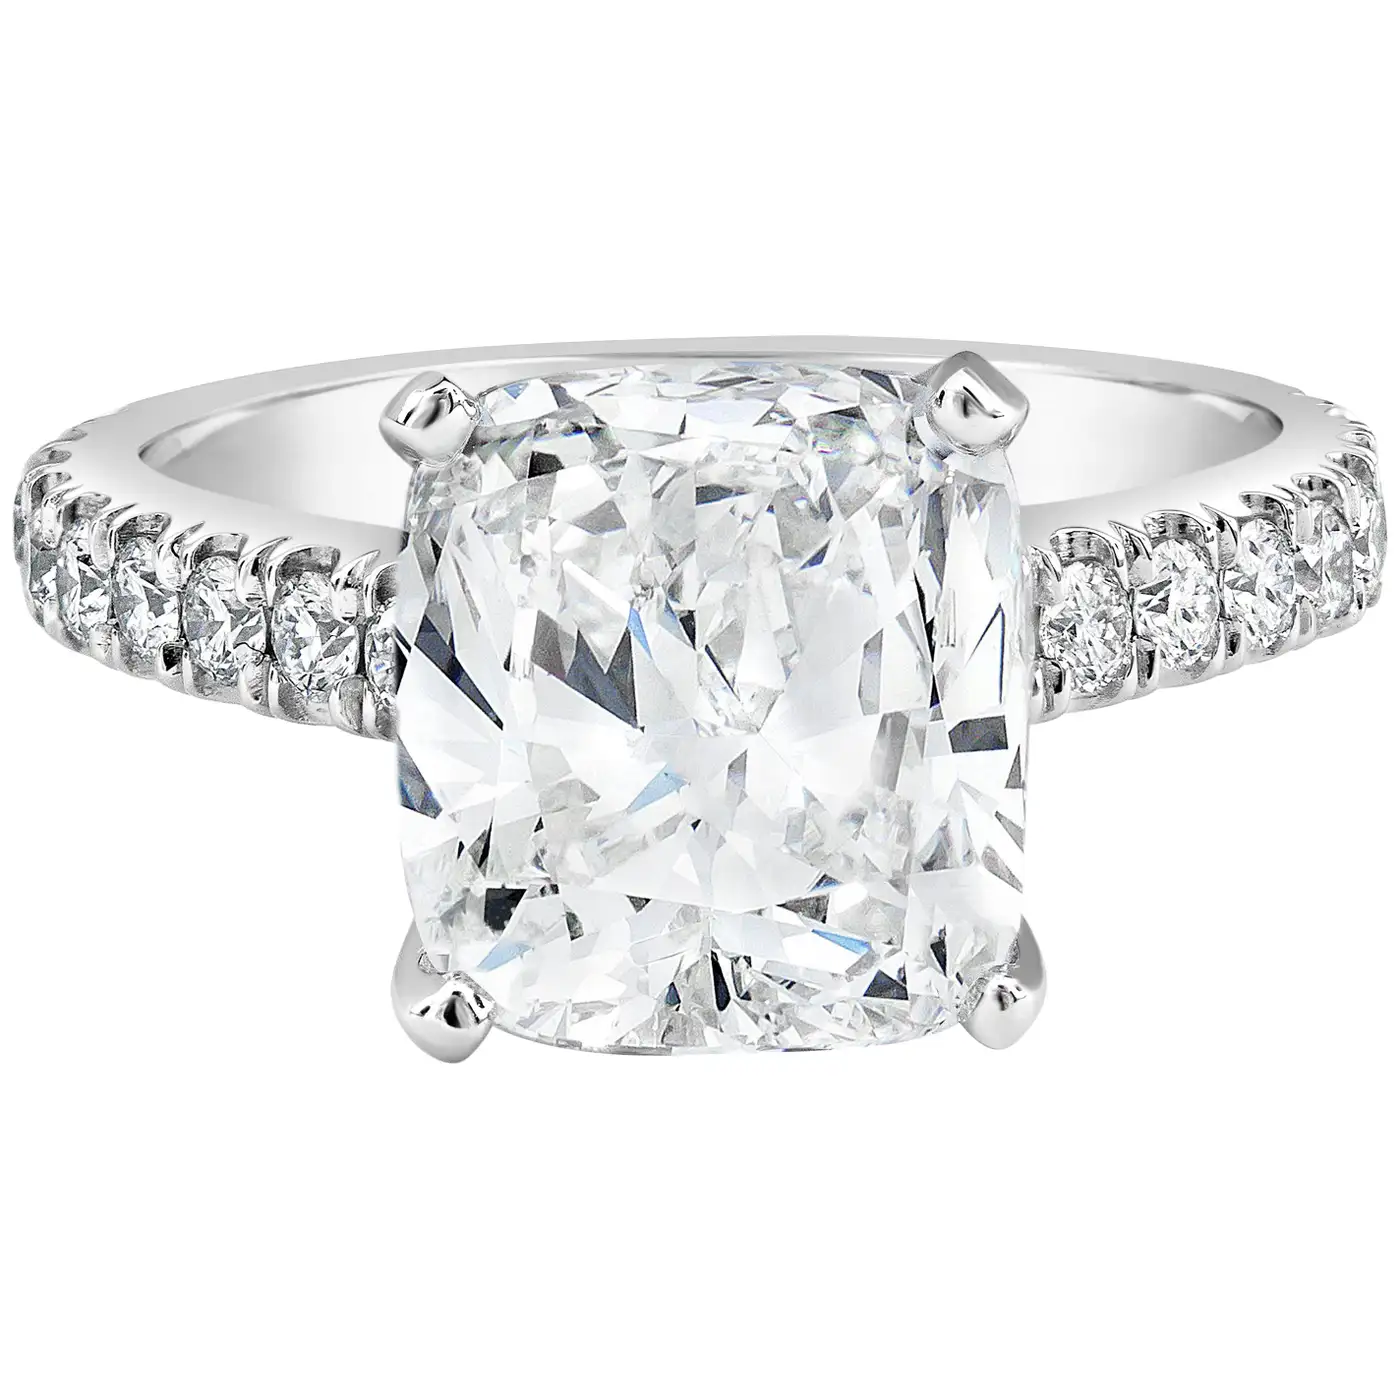 Roman-Malakov-GIA-Certified-3.25-Carats-Cushion-Cut-Diamond-Engagement-Ring-1.webp